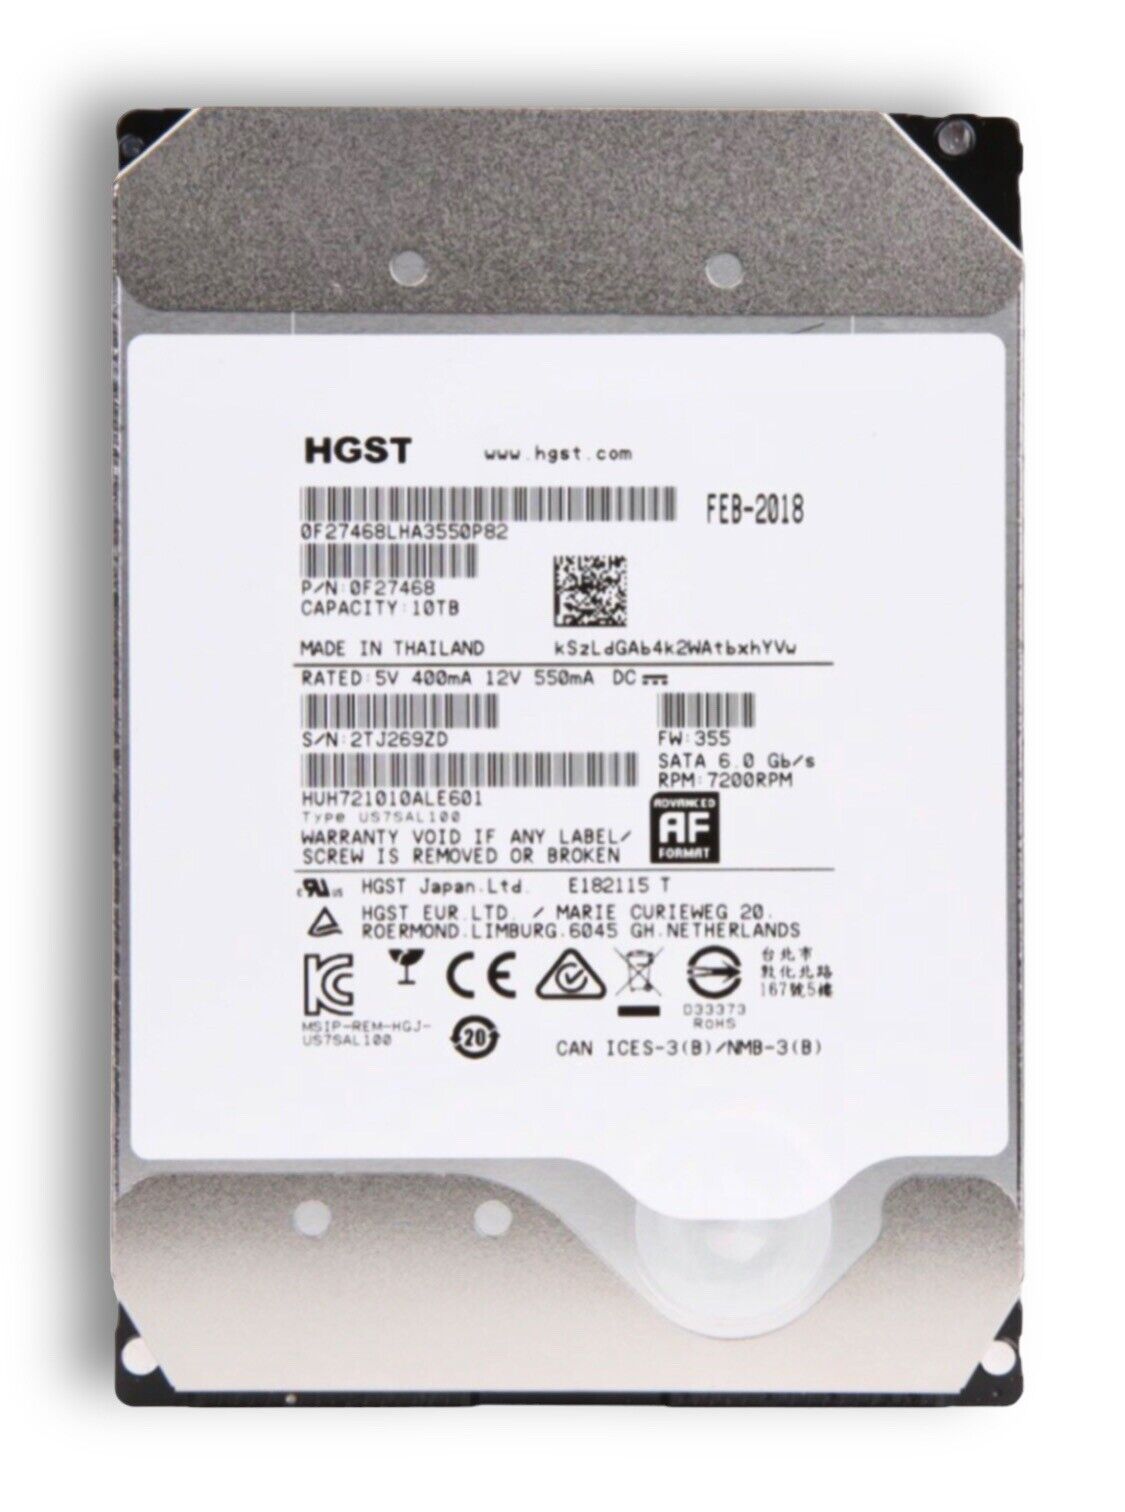 HGST 10TB HE10 SERIES SATA HARD DRIVE HUH721010ALE601 0F27468 6G 7.2K AF 3.5”HDD